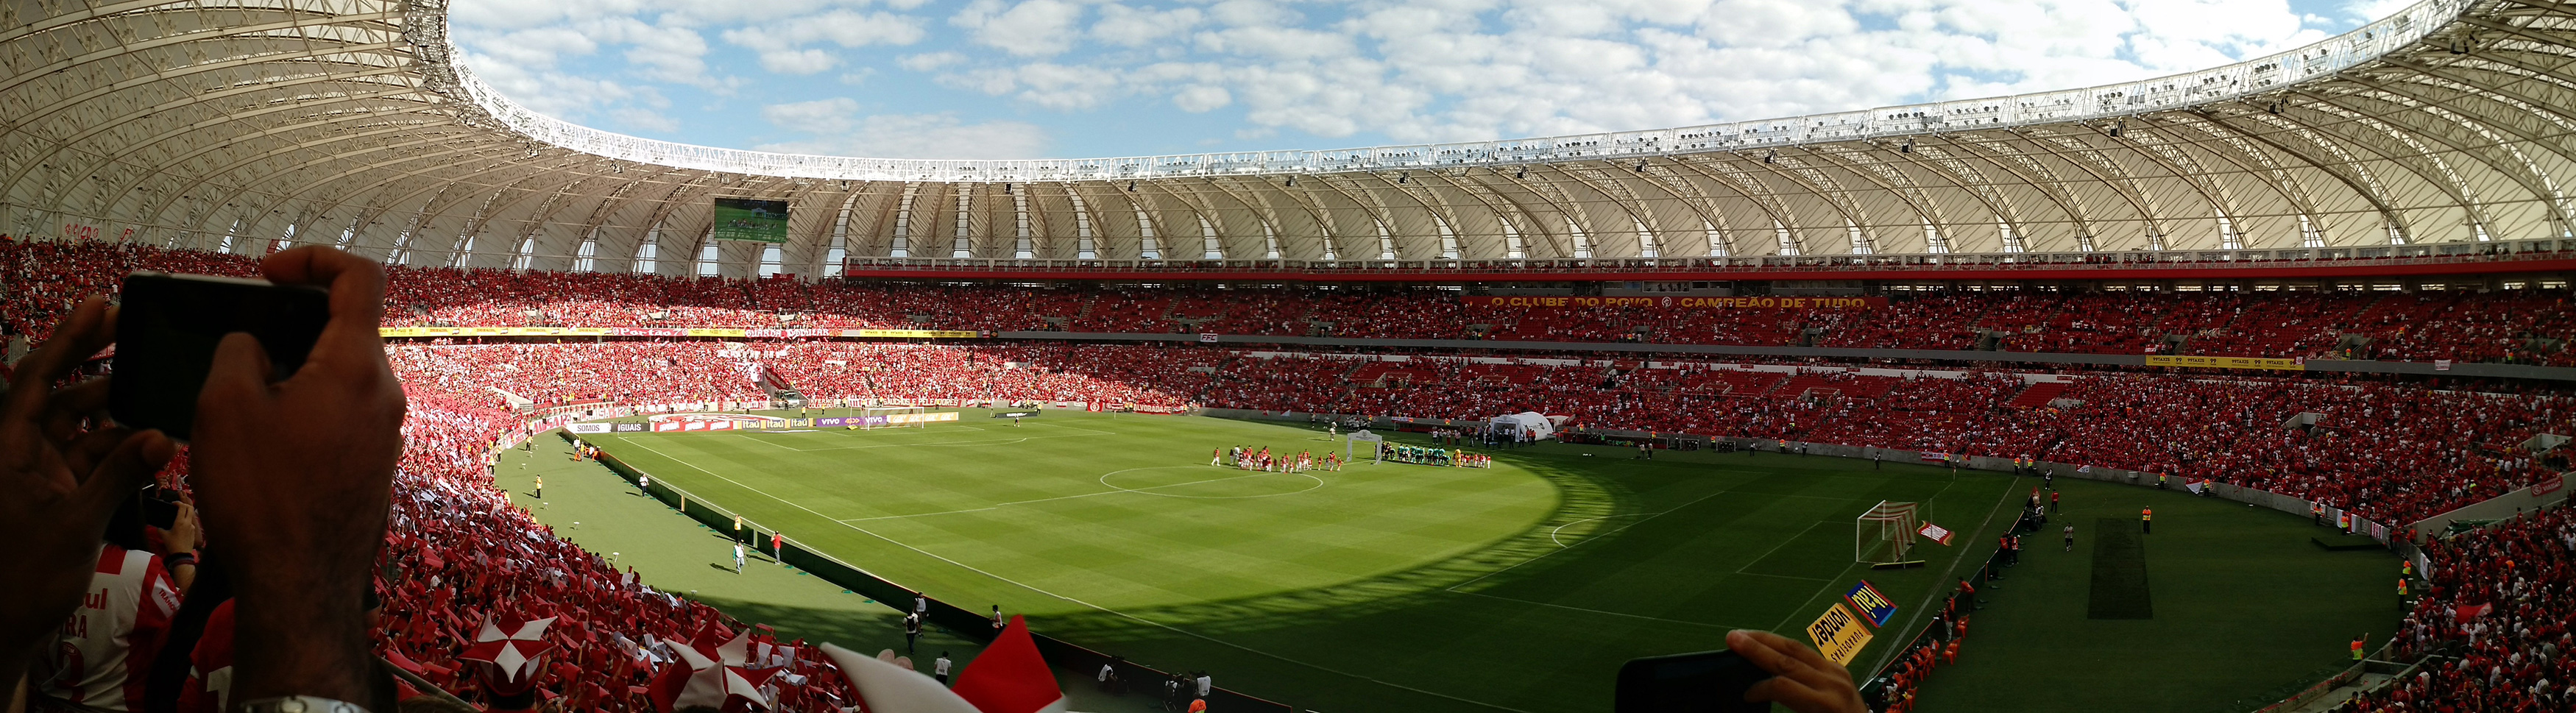 Panorama_Estadio_Beira-Rio3000